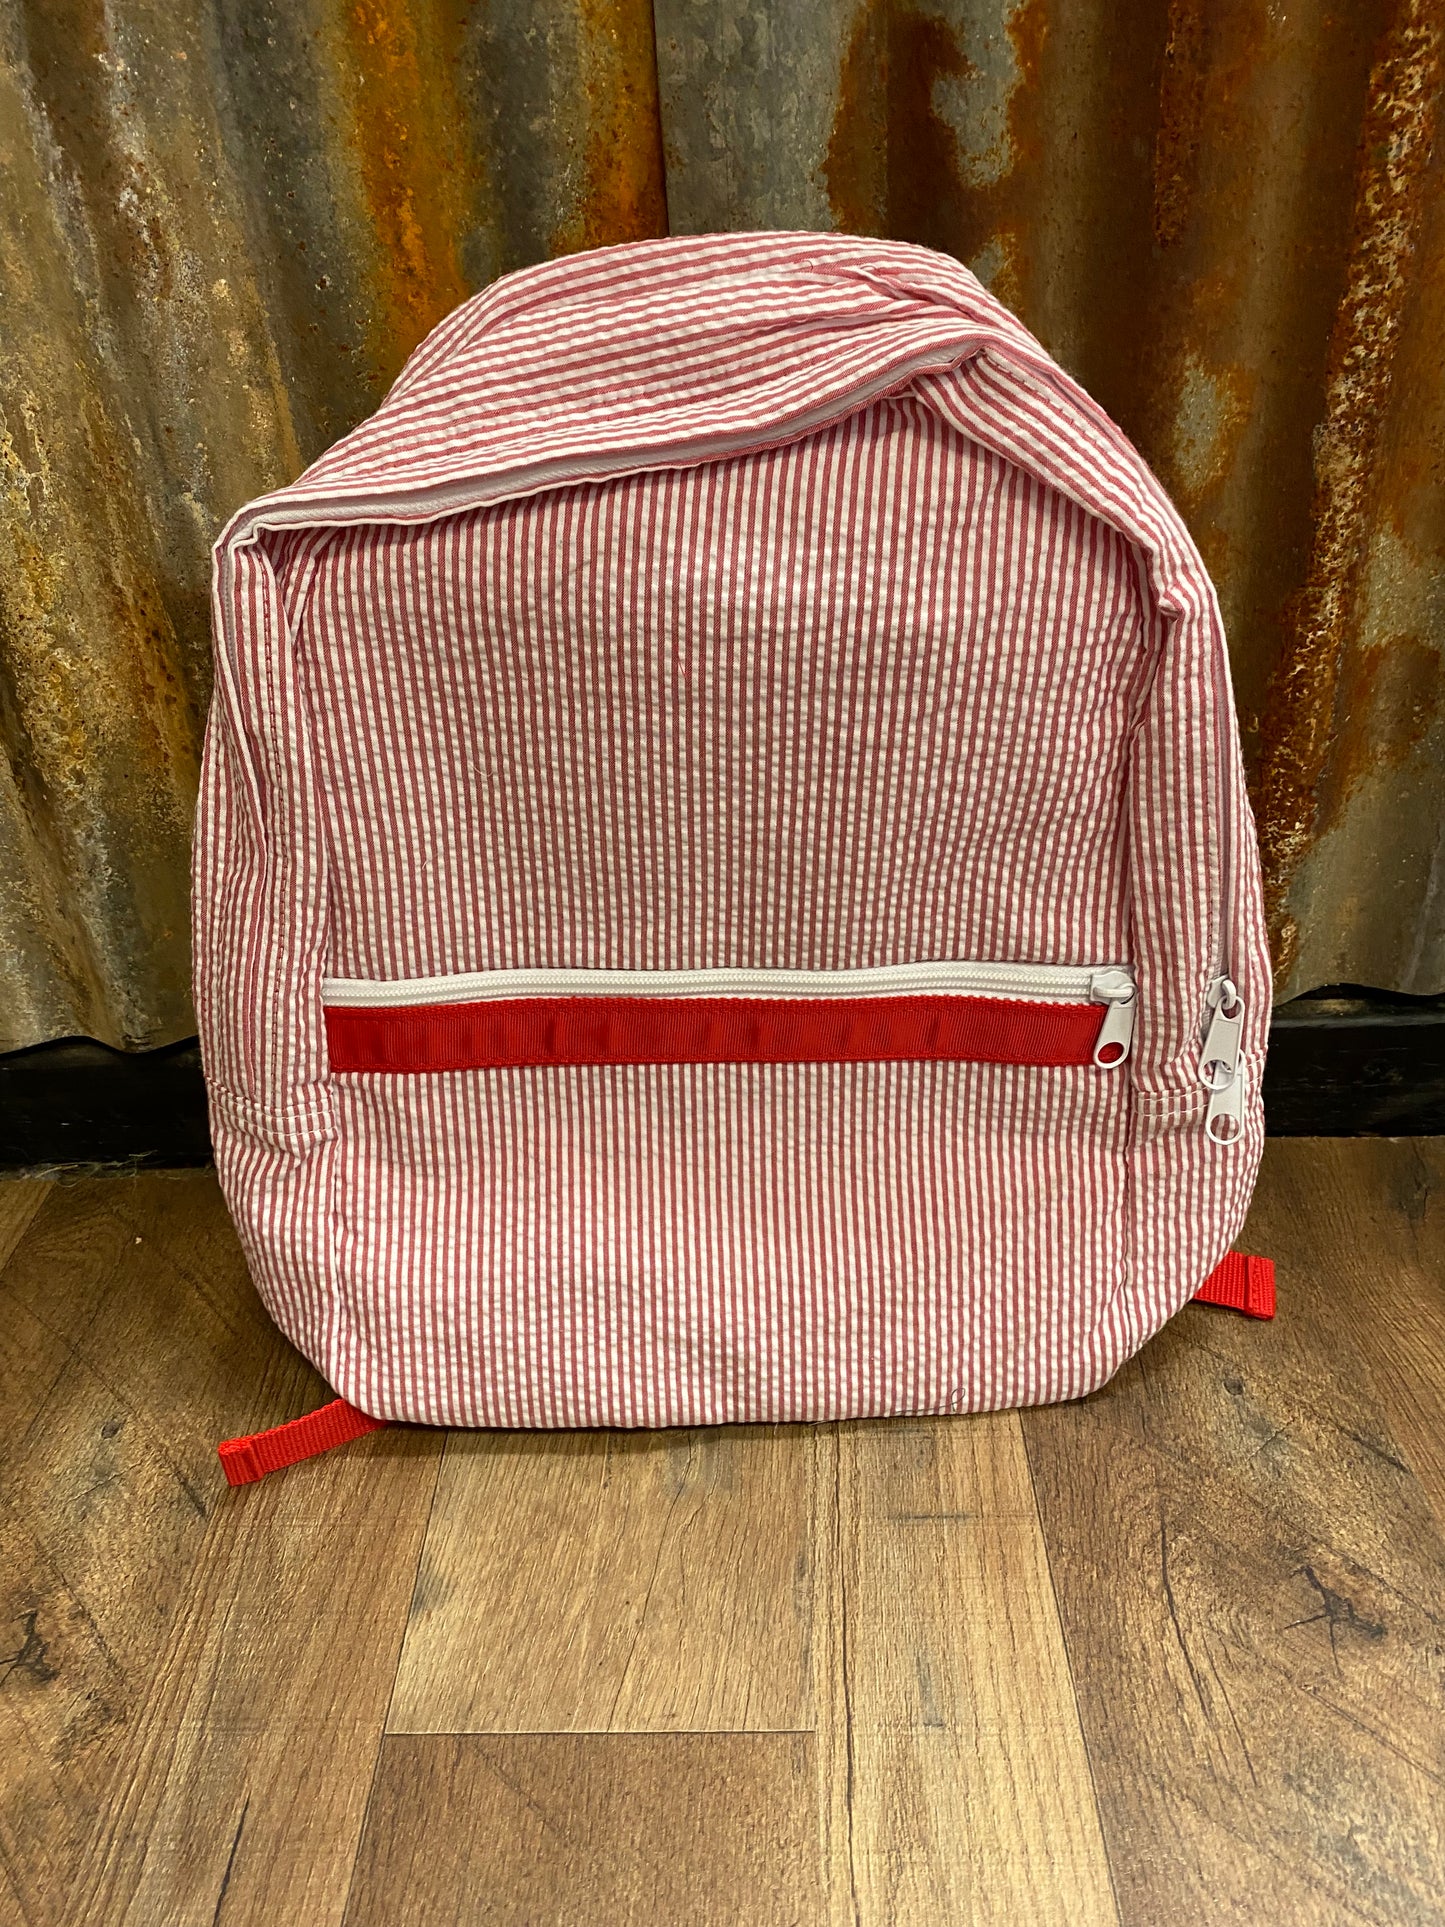 Medium red backpack